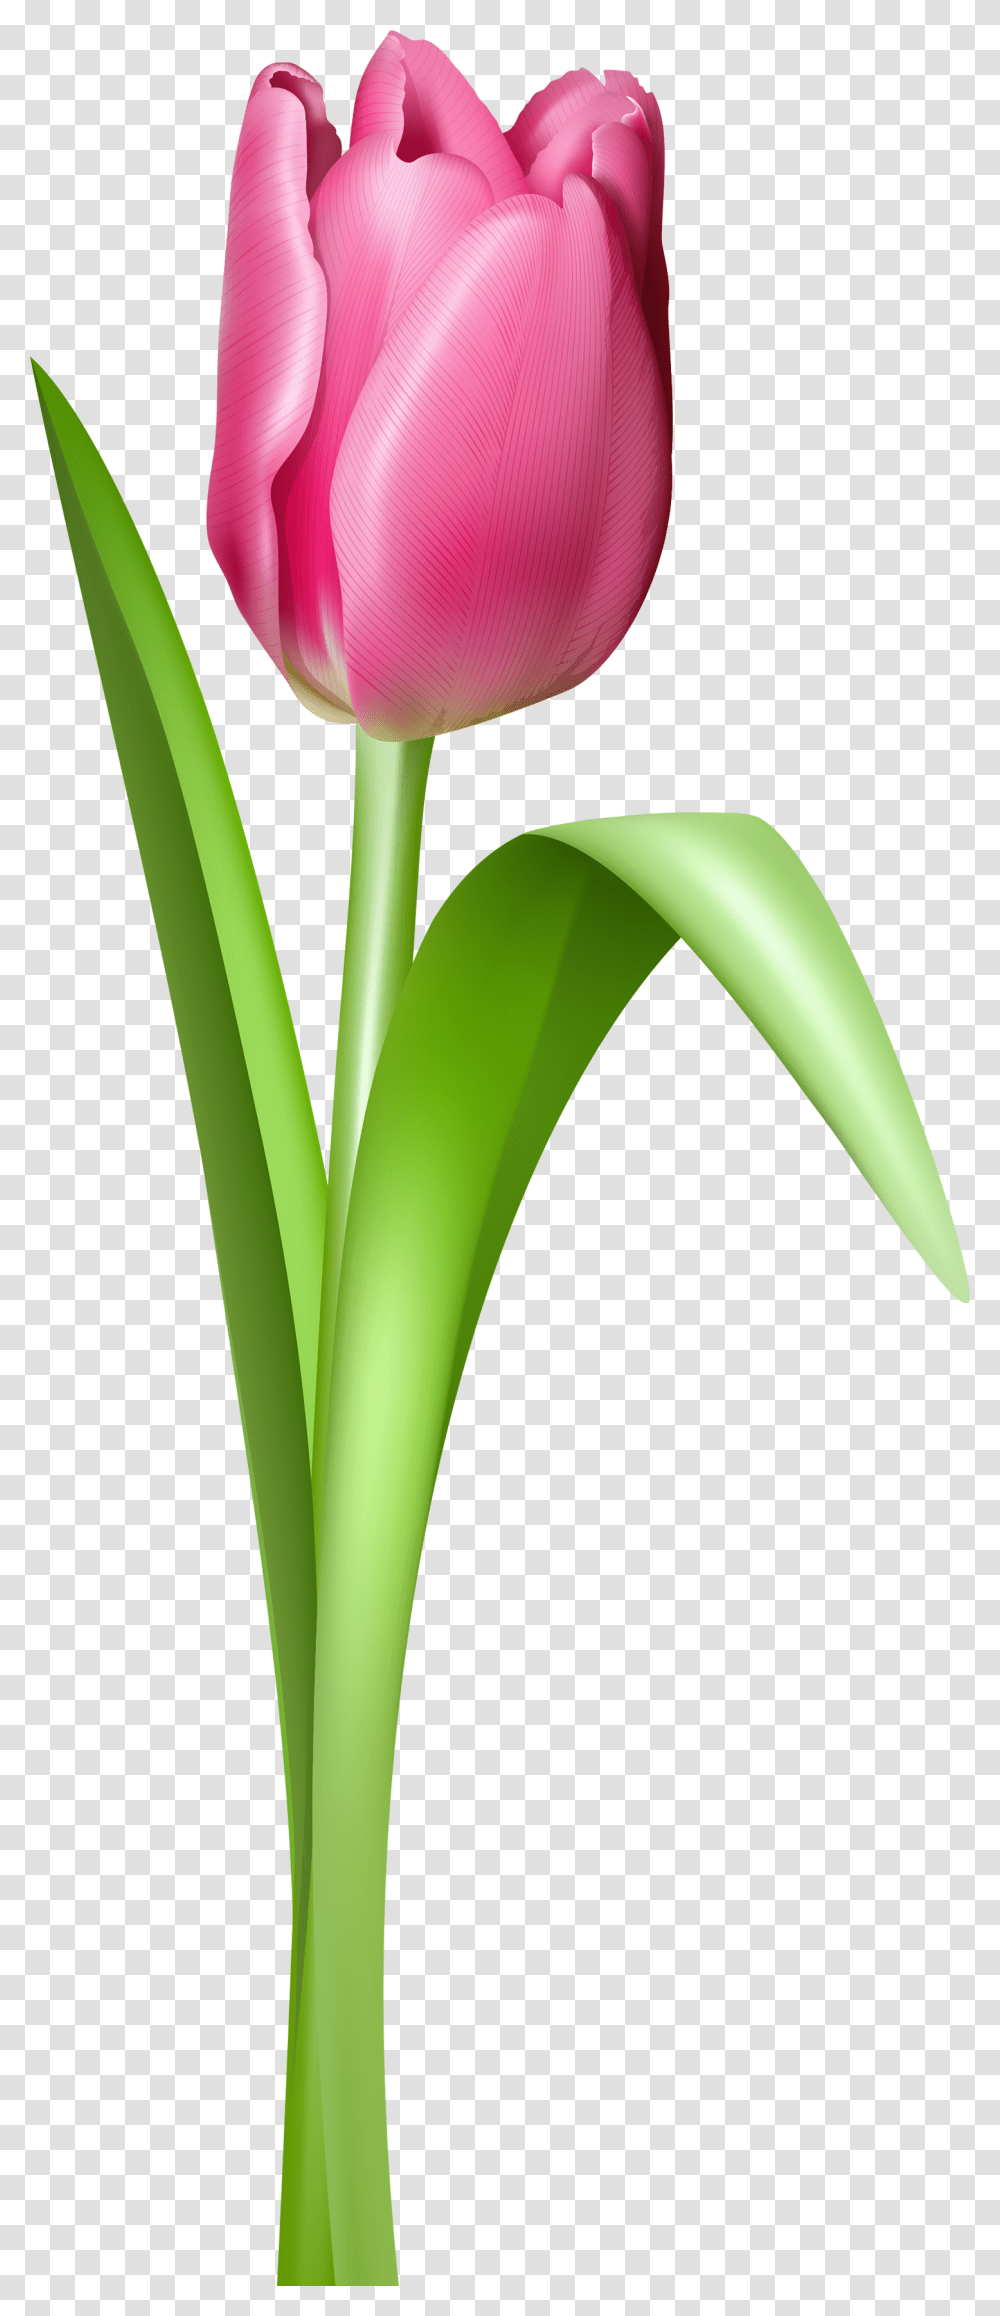 Tulip Clipart 2 Image Tulip Flower, Plant, Blossom, Petal Transparent Png